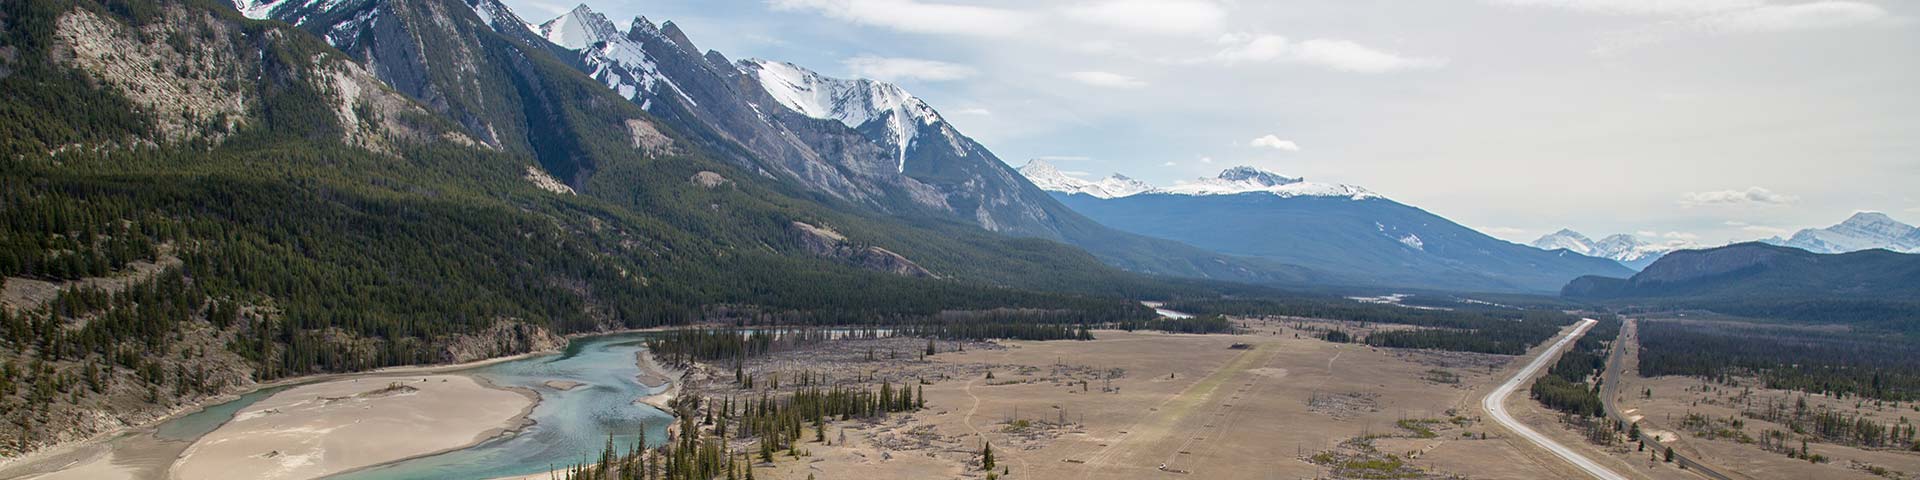 Aerial view of the Jasper Airstrip